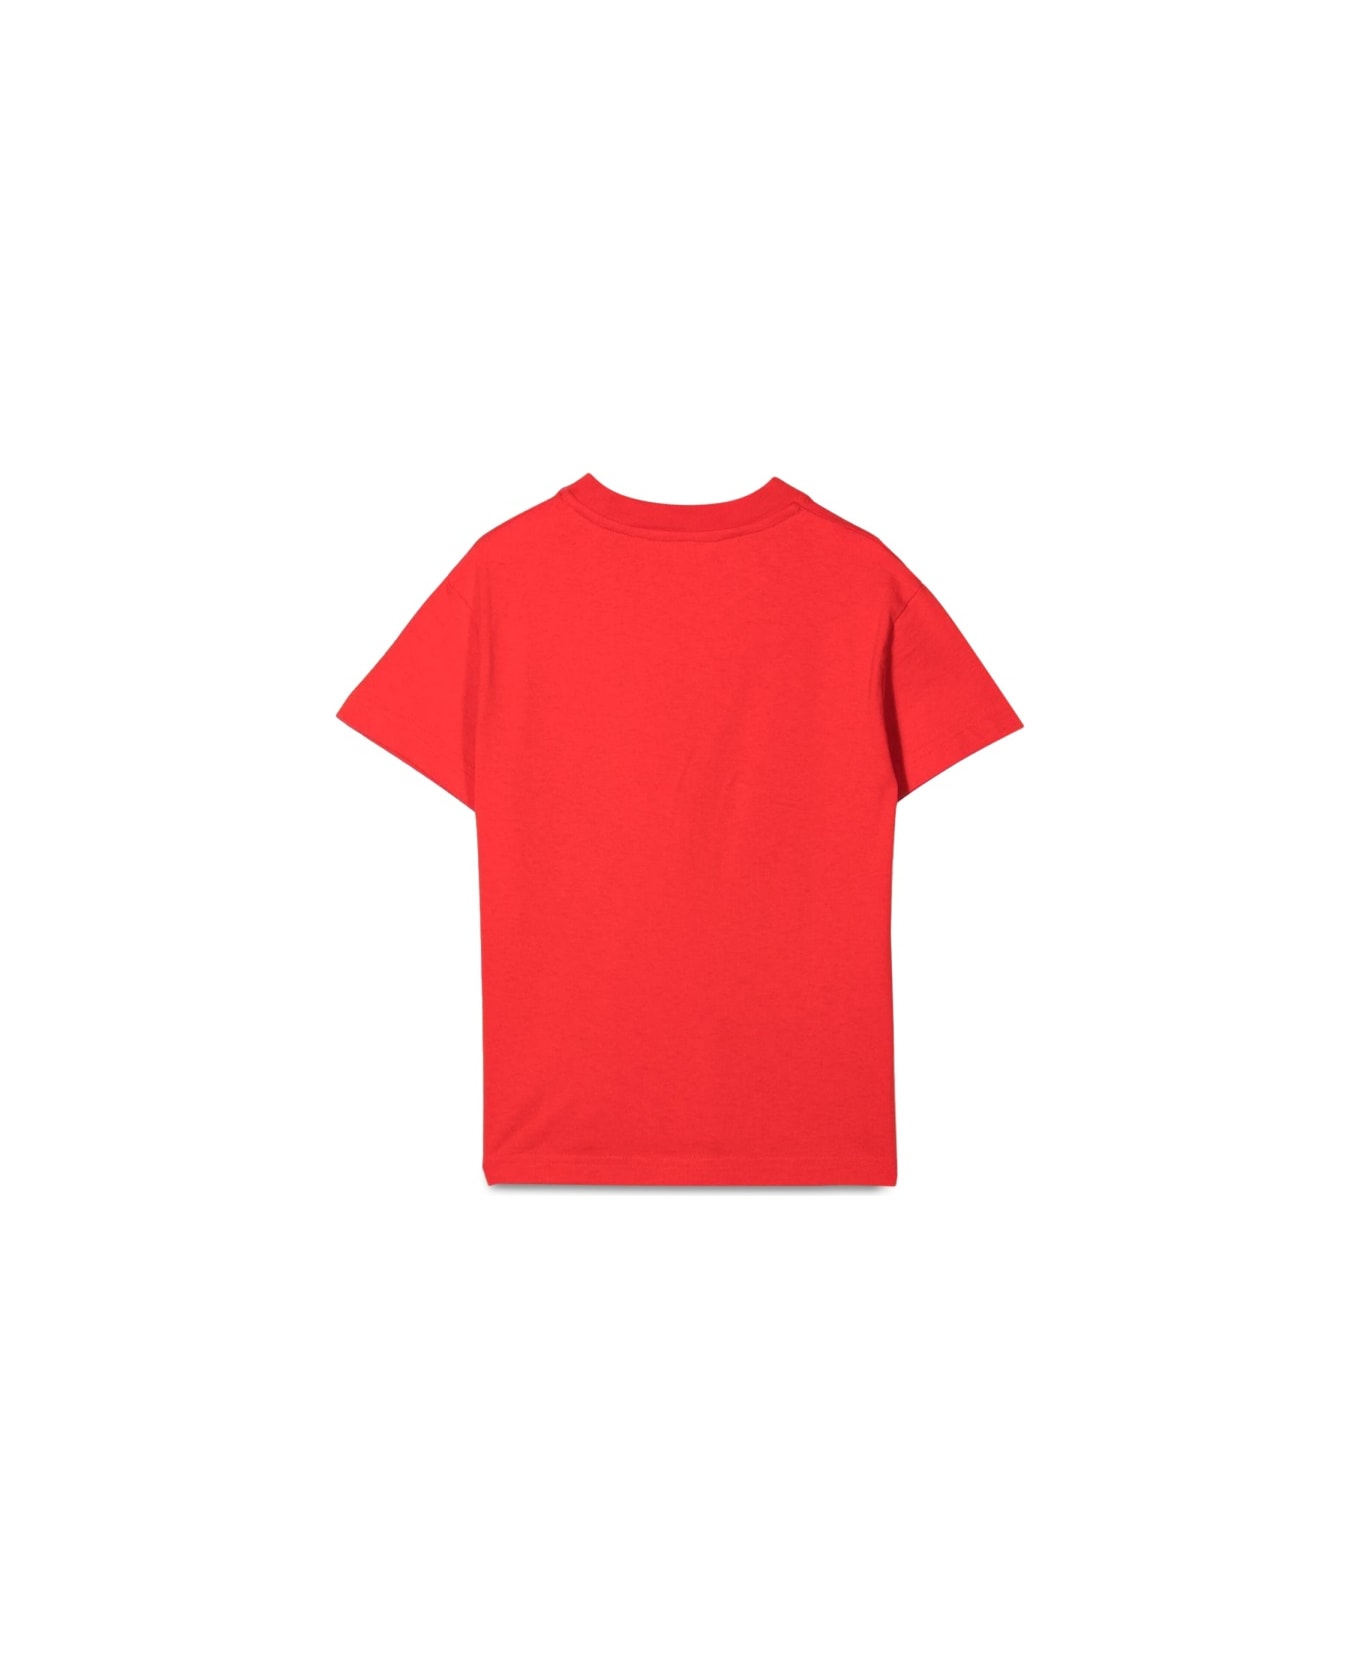 Palm Angels Bear T-shirt - RED